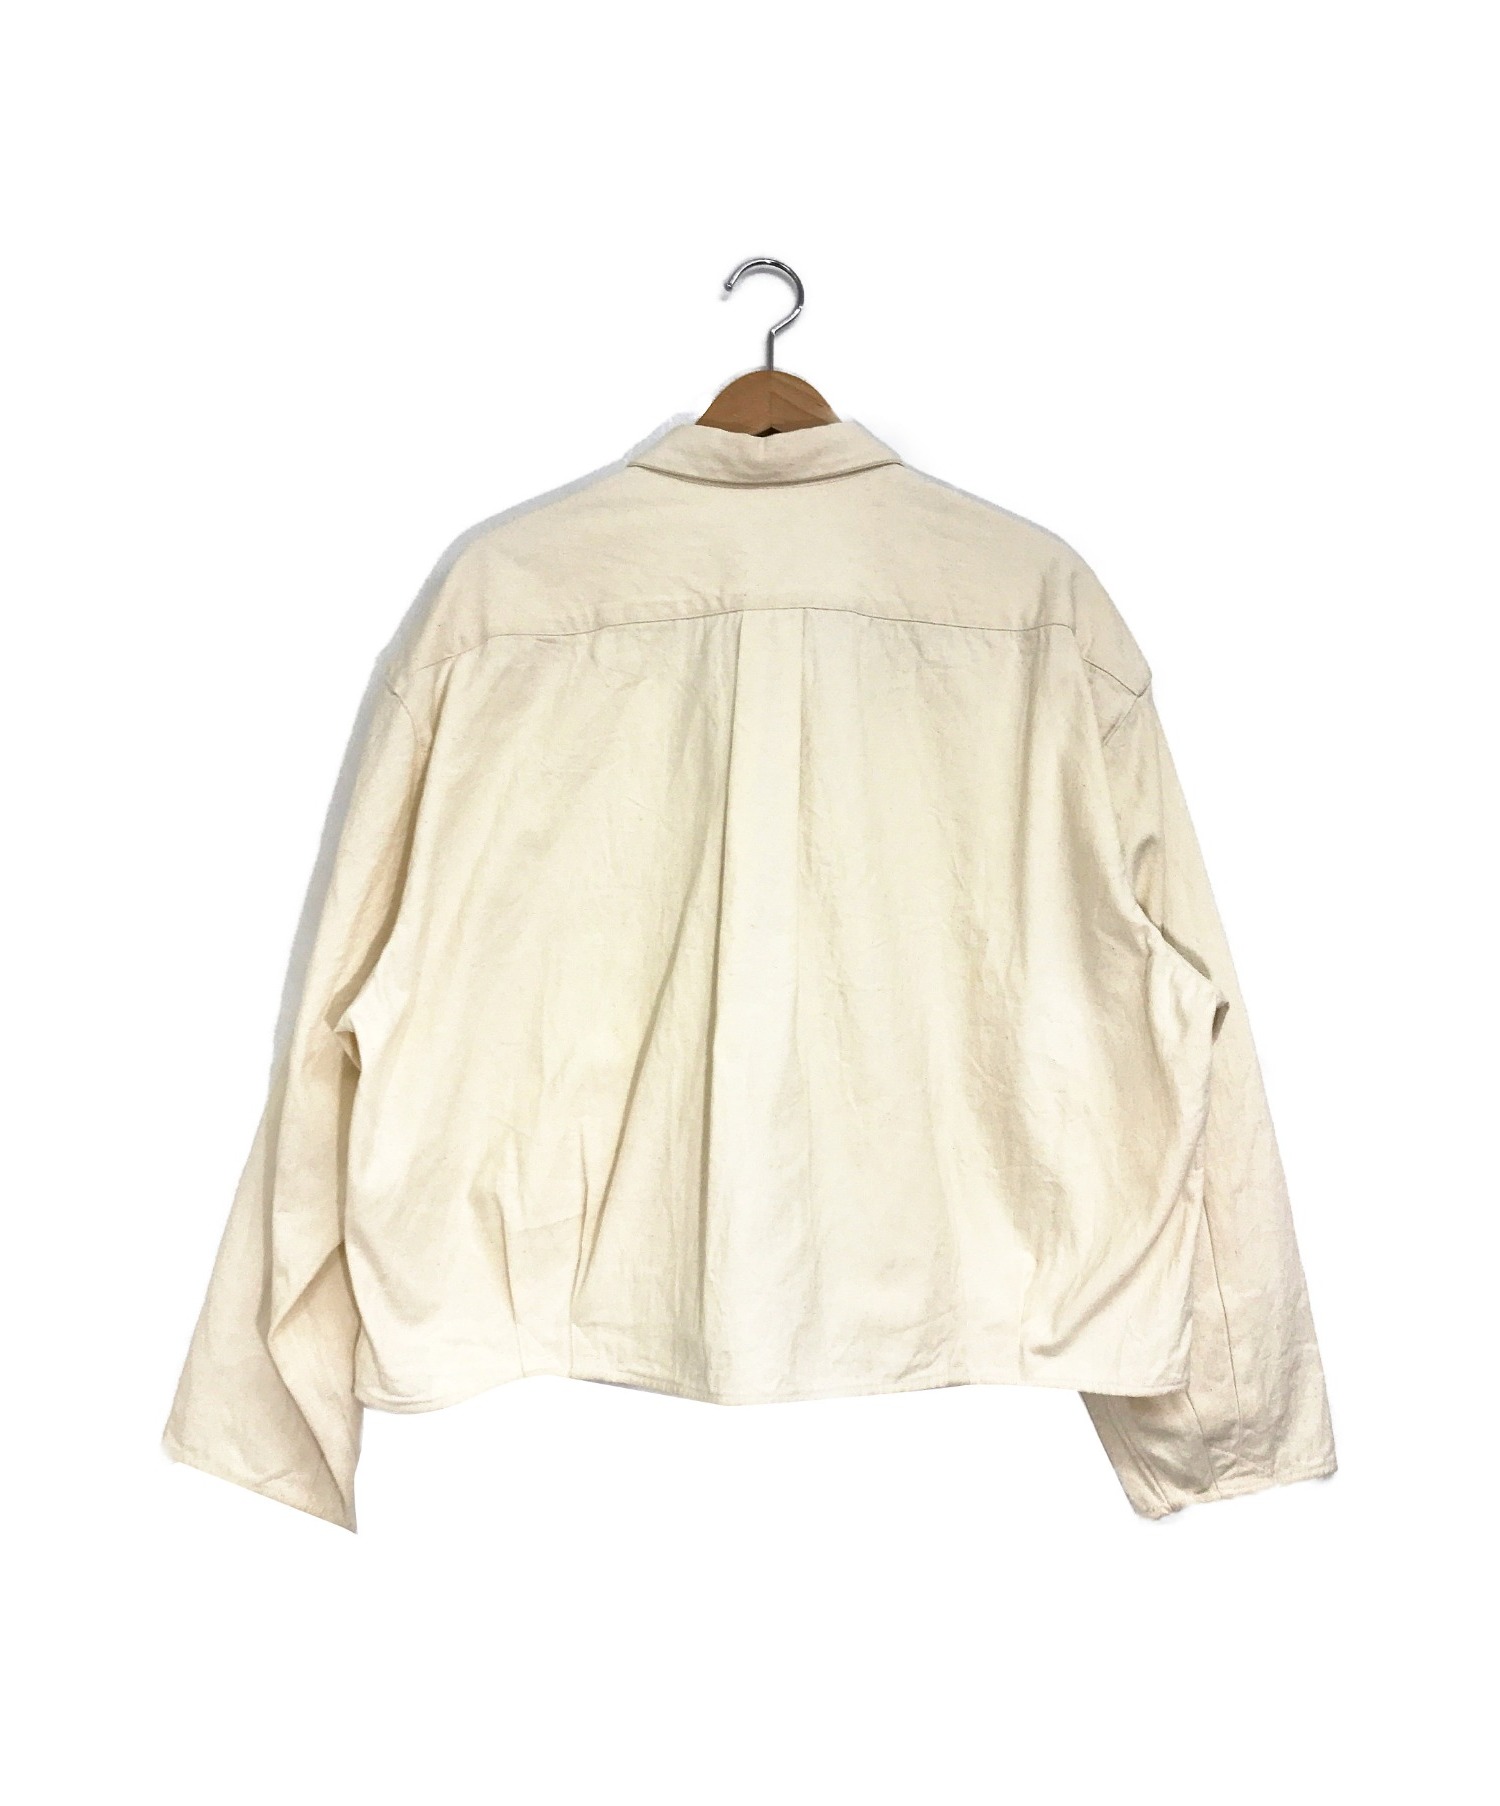 uru tokyo (ウル トーキョー) オーバーサイズショートシャツ アイボリー サイズ:Free OVERSIZED SHORT SHIRT